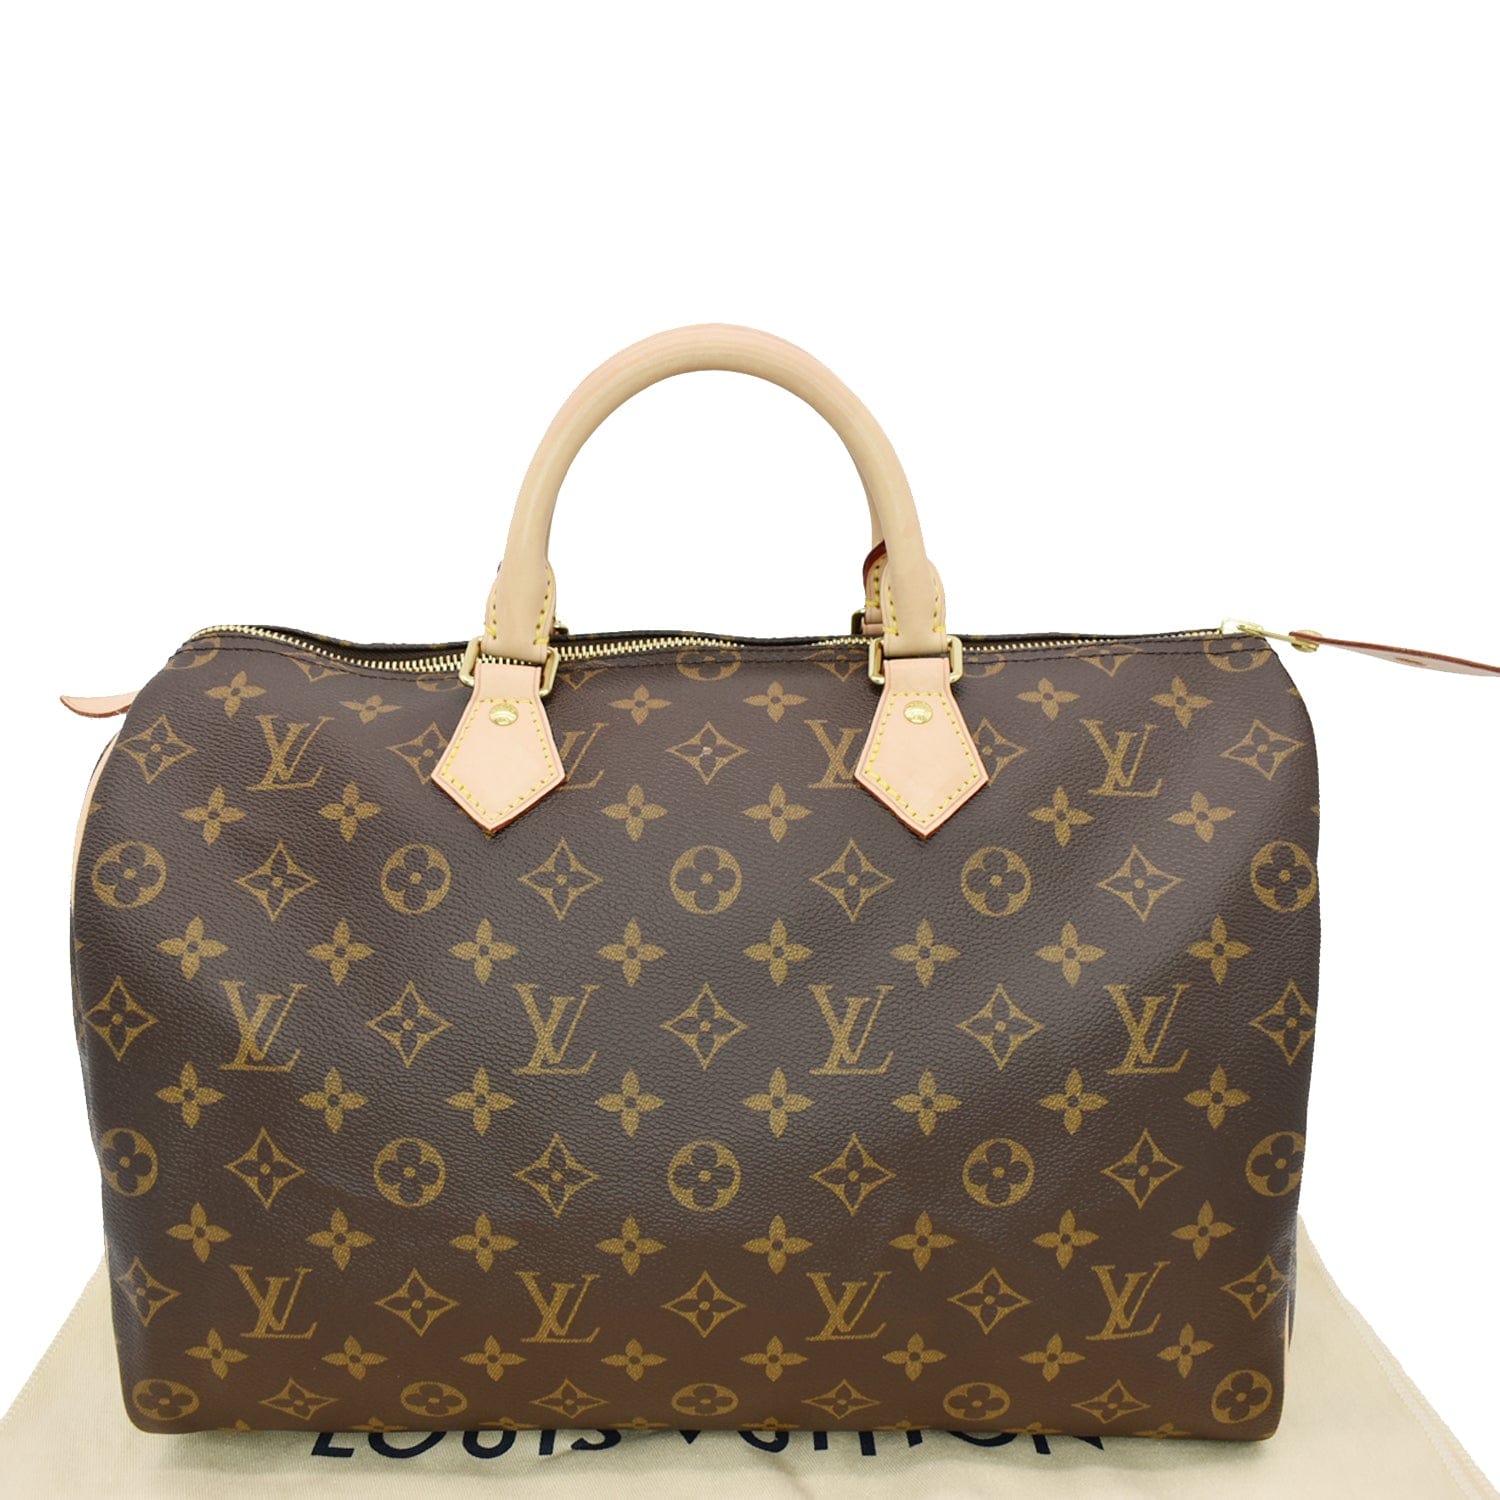 Sold at Auction: Louis Vuitton Brown Speedy Satchel Bag